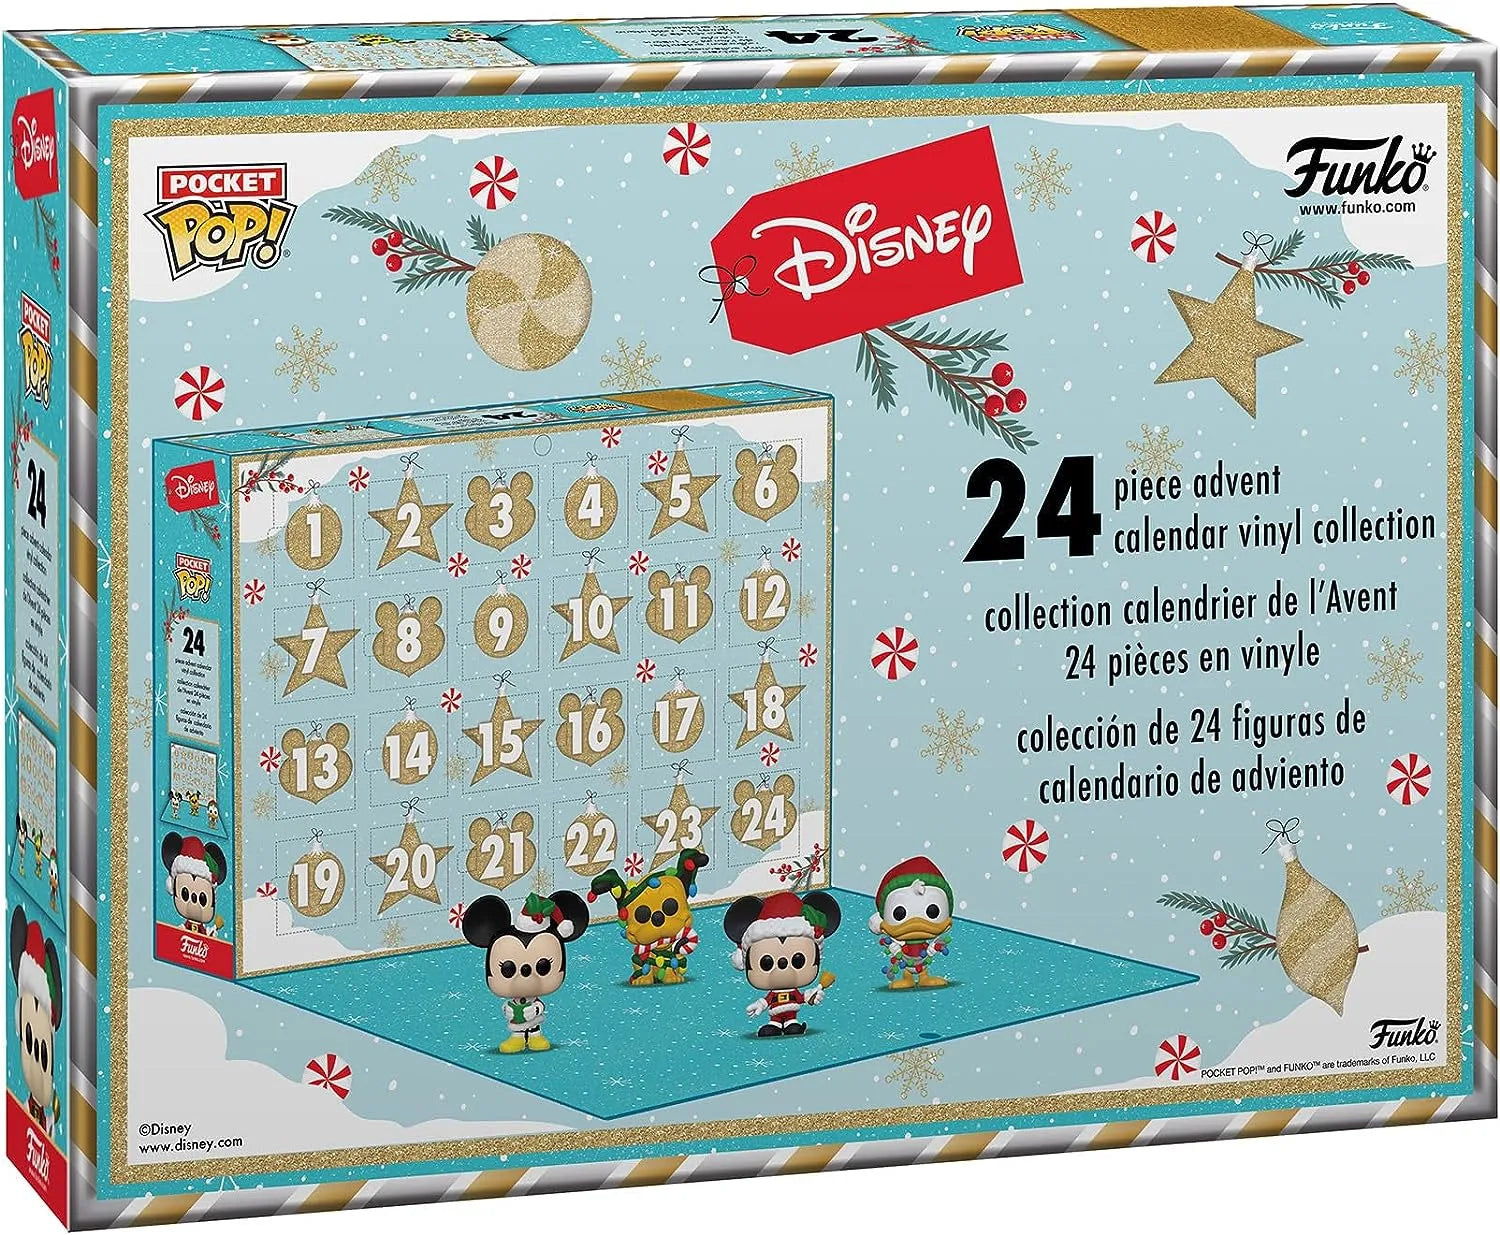 Christmas Advent Calendars - Funko Disney Calendars - The Toy Room